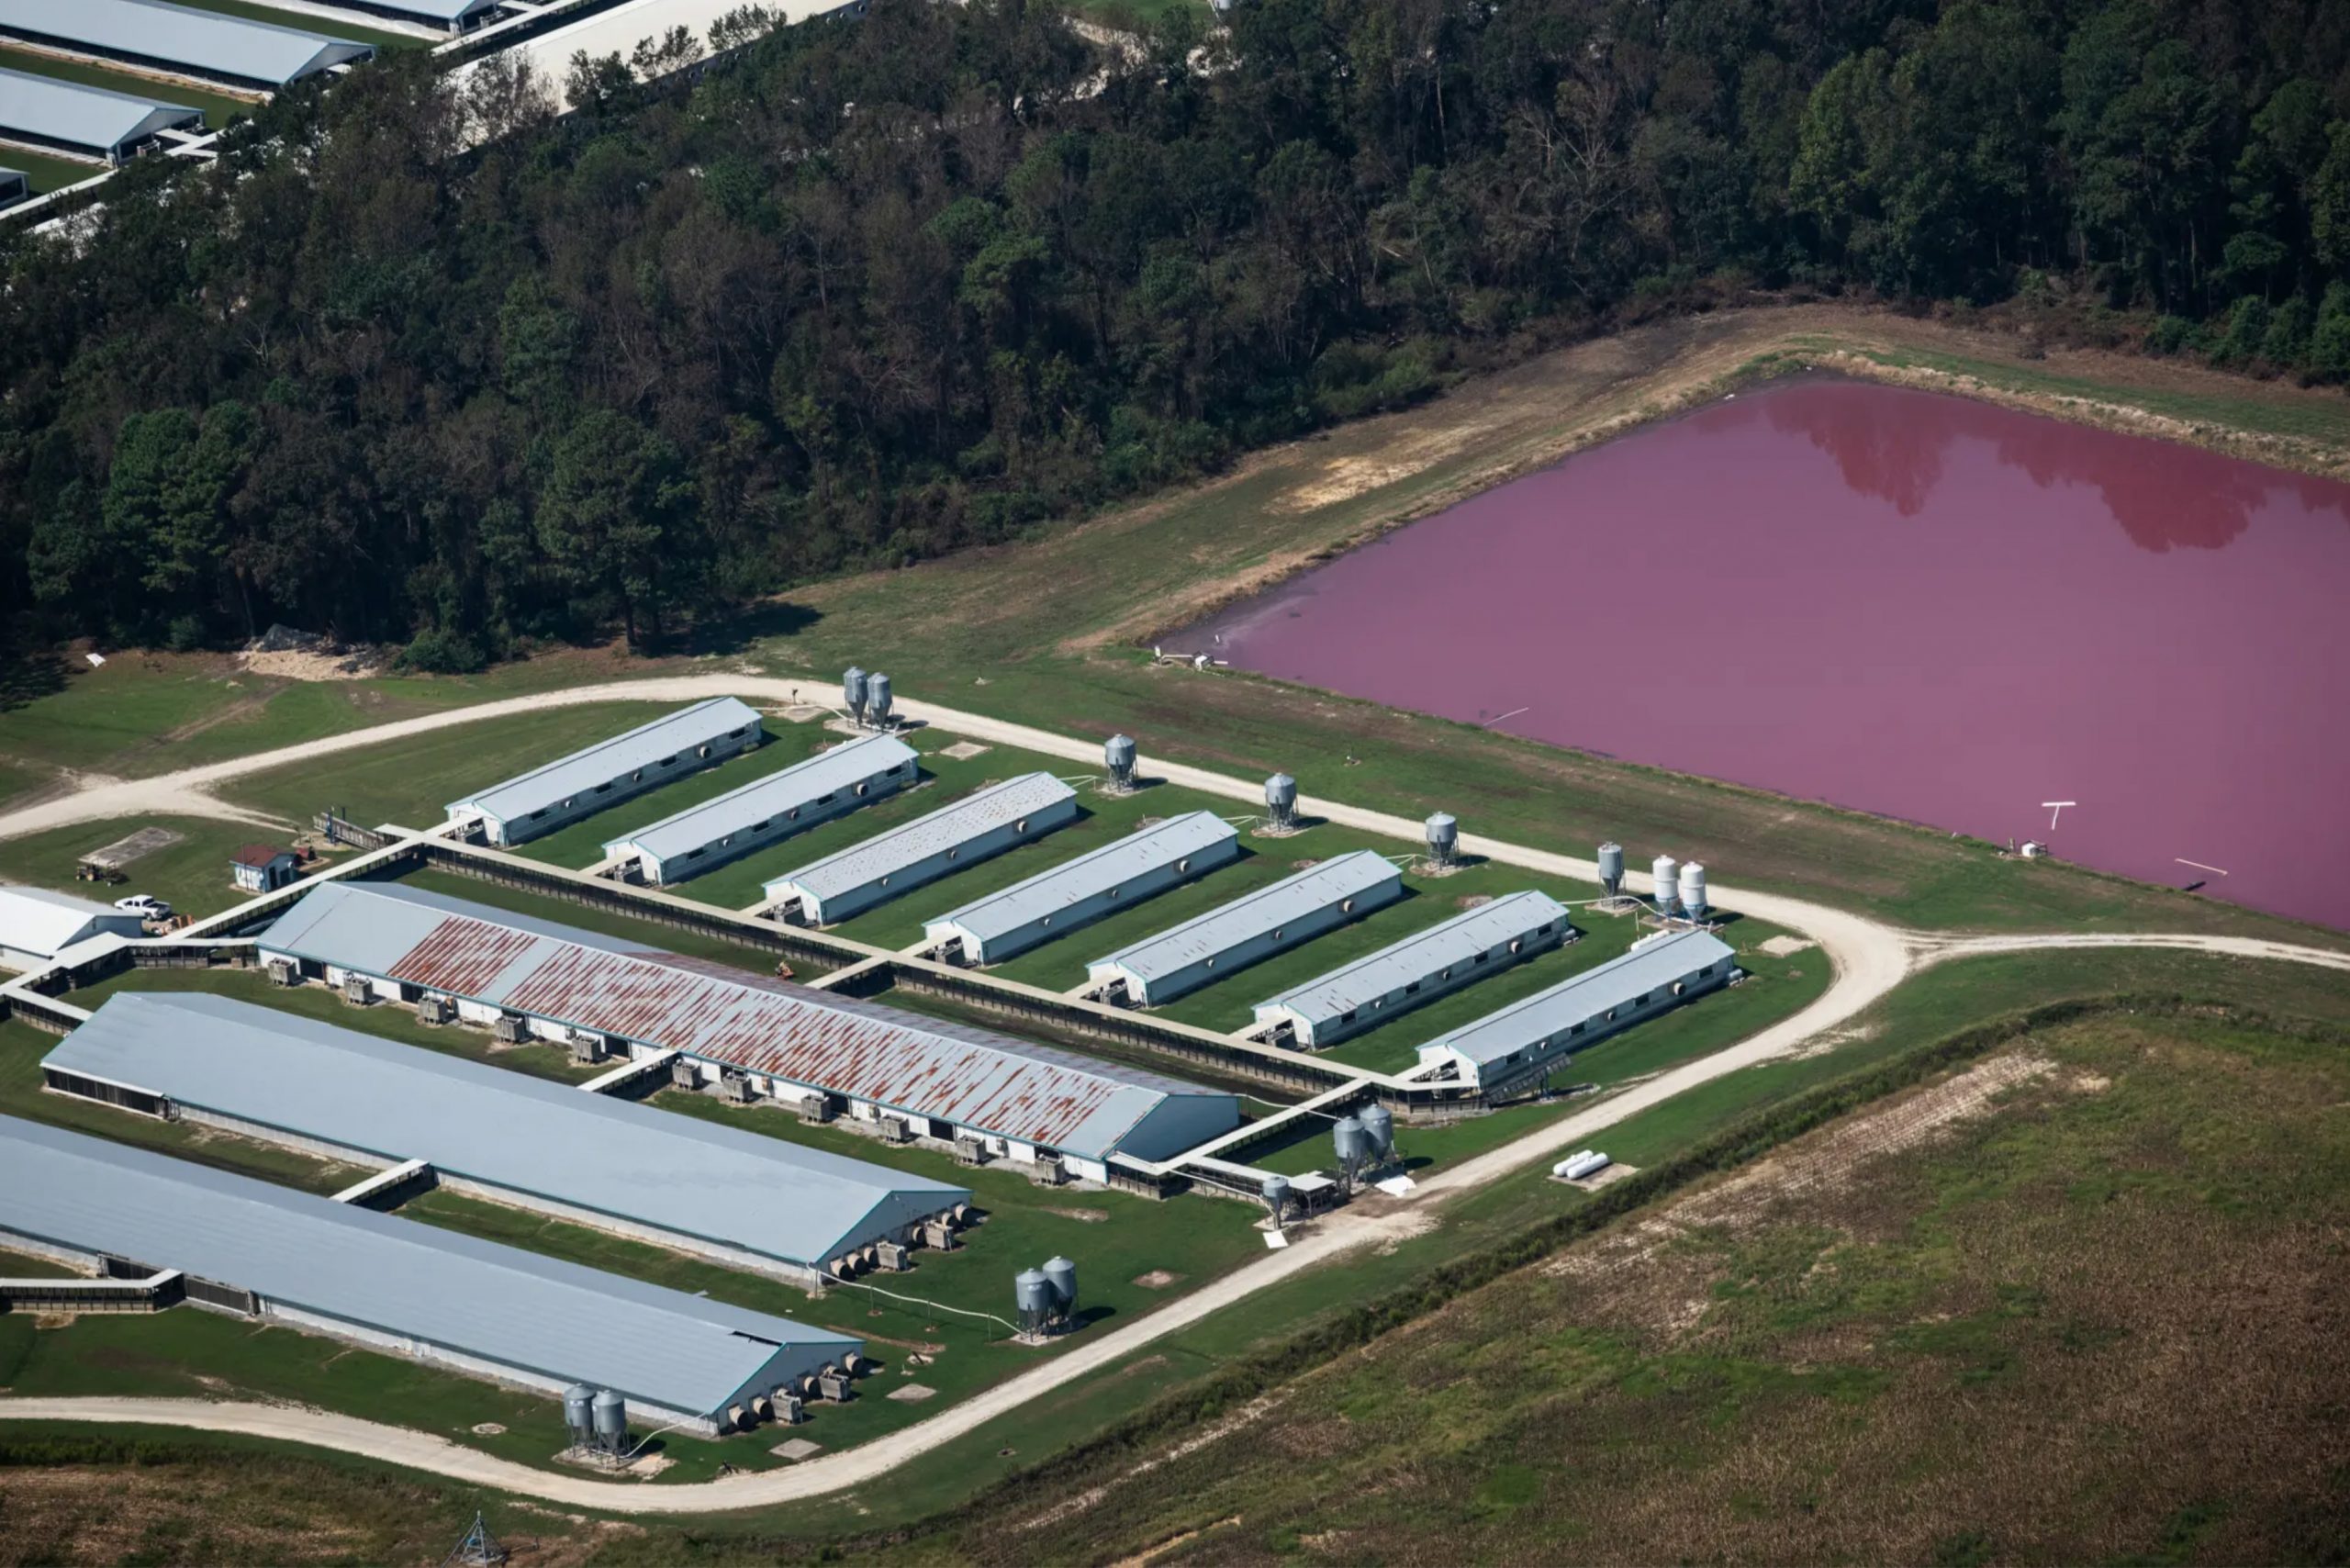 A North Carolina pig farm with open-air pig waste lagoon